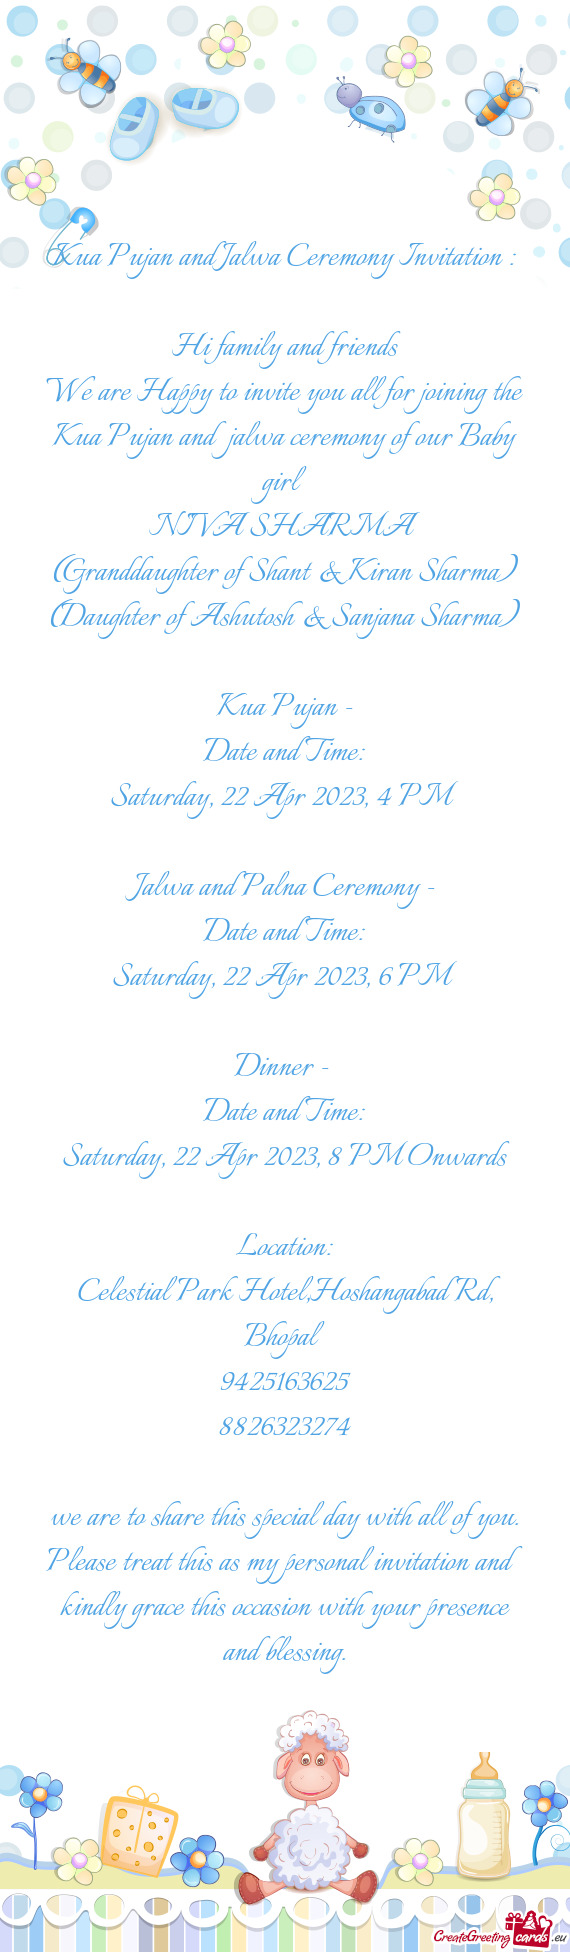 Kua Pujan and Jalwa Ceremony Invitation